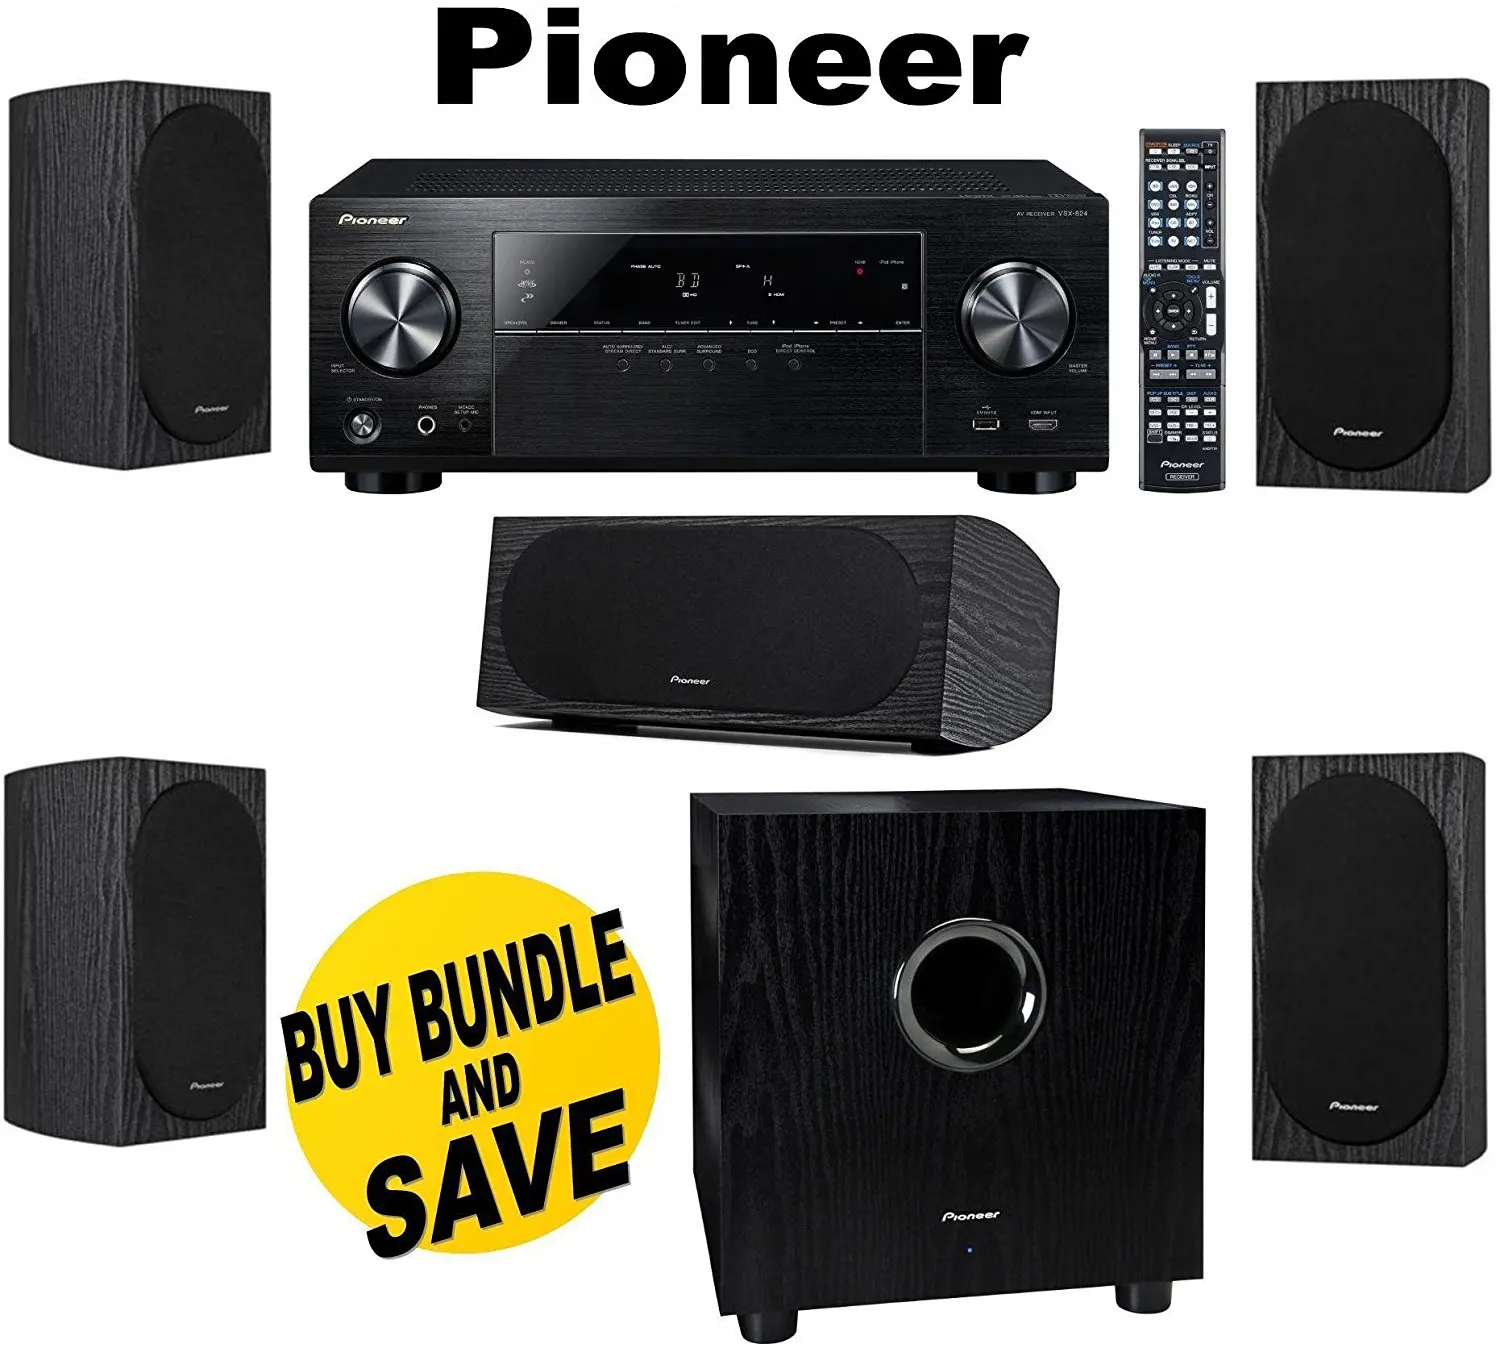 Buy Pioneer Vsx 824 5 2 Channel Network A V Receiver Black